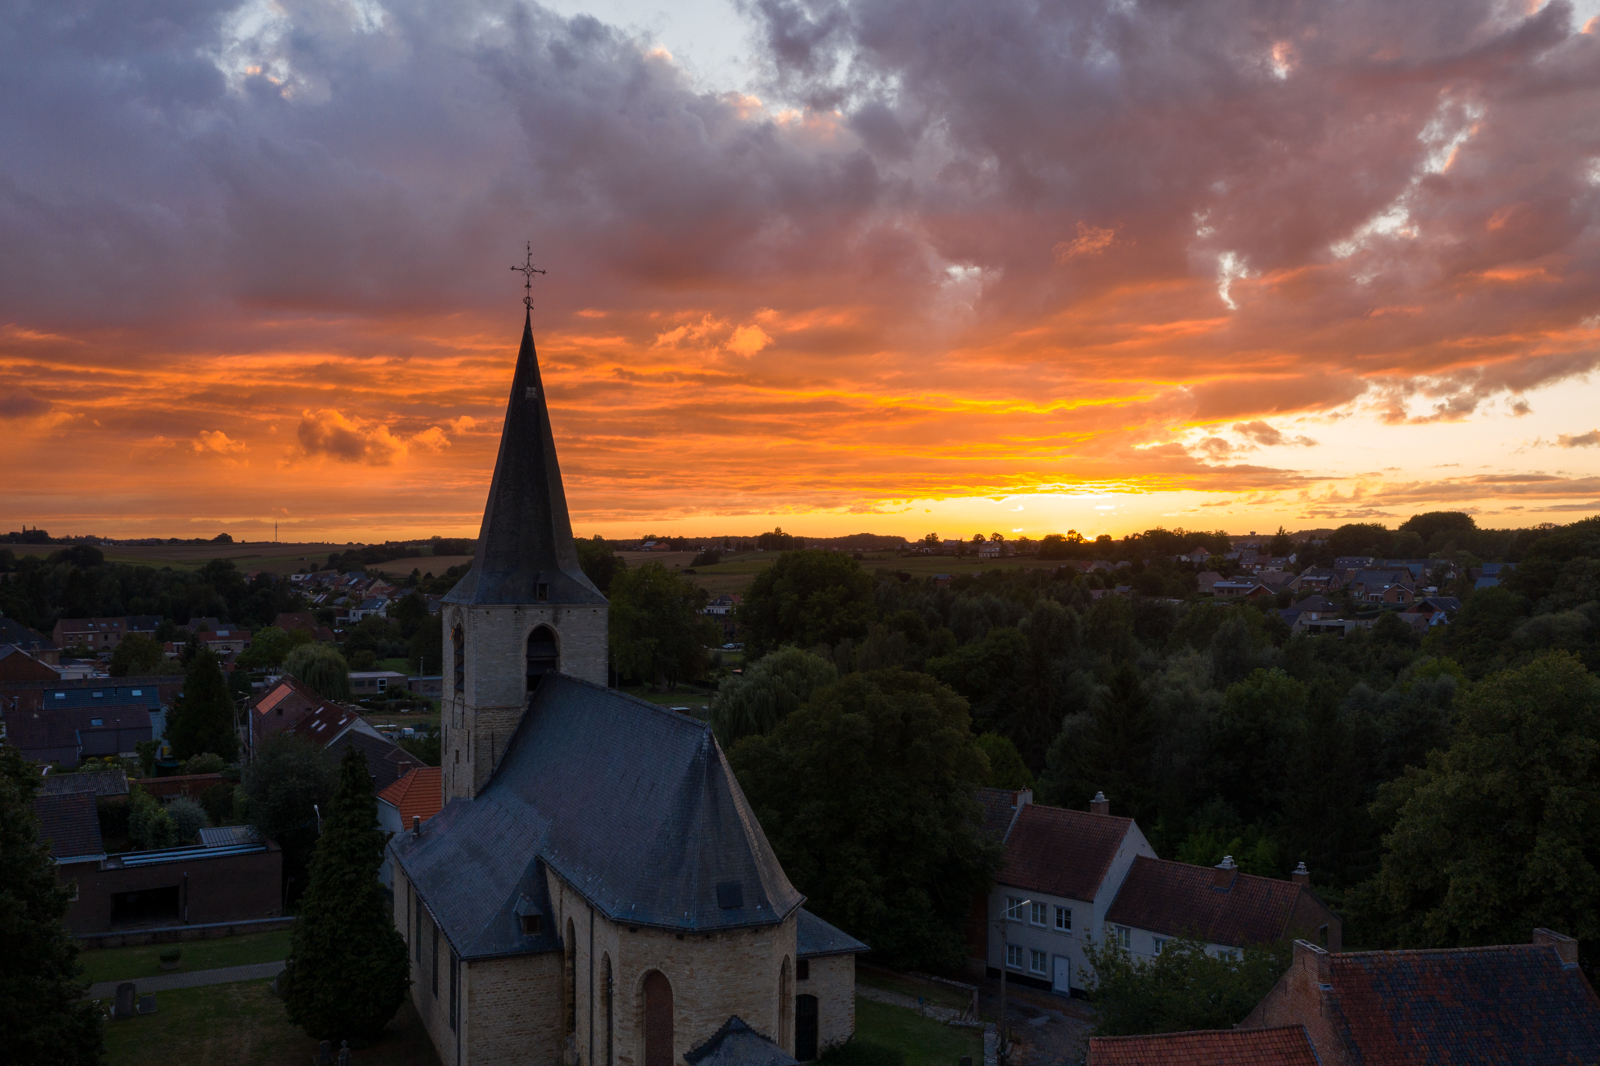 Stunning sunset over St. Lambertus Church in Leefdaal, Flemish Brabant, Belgium